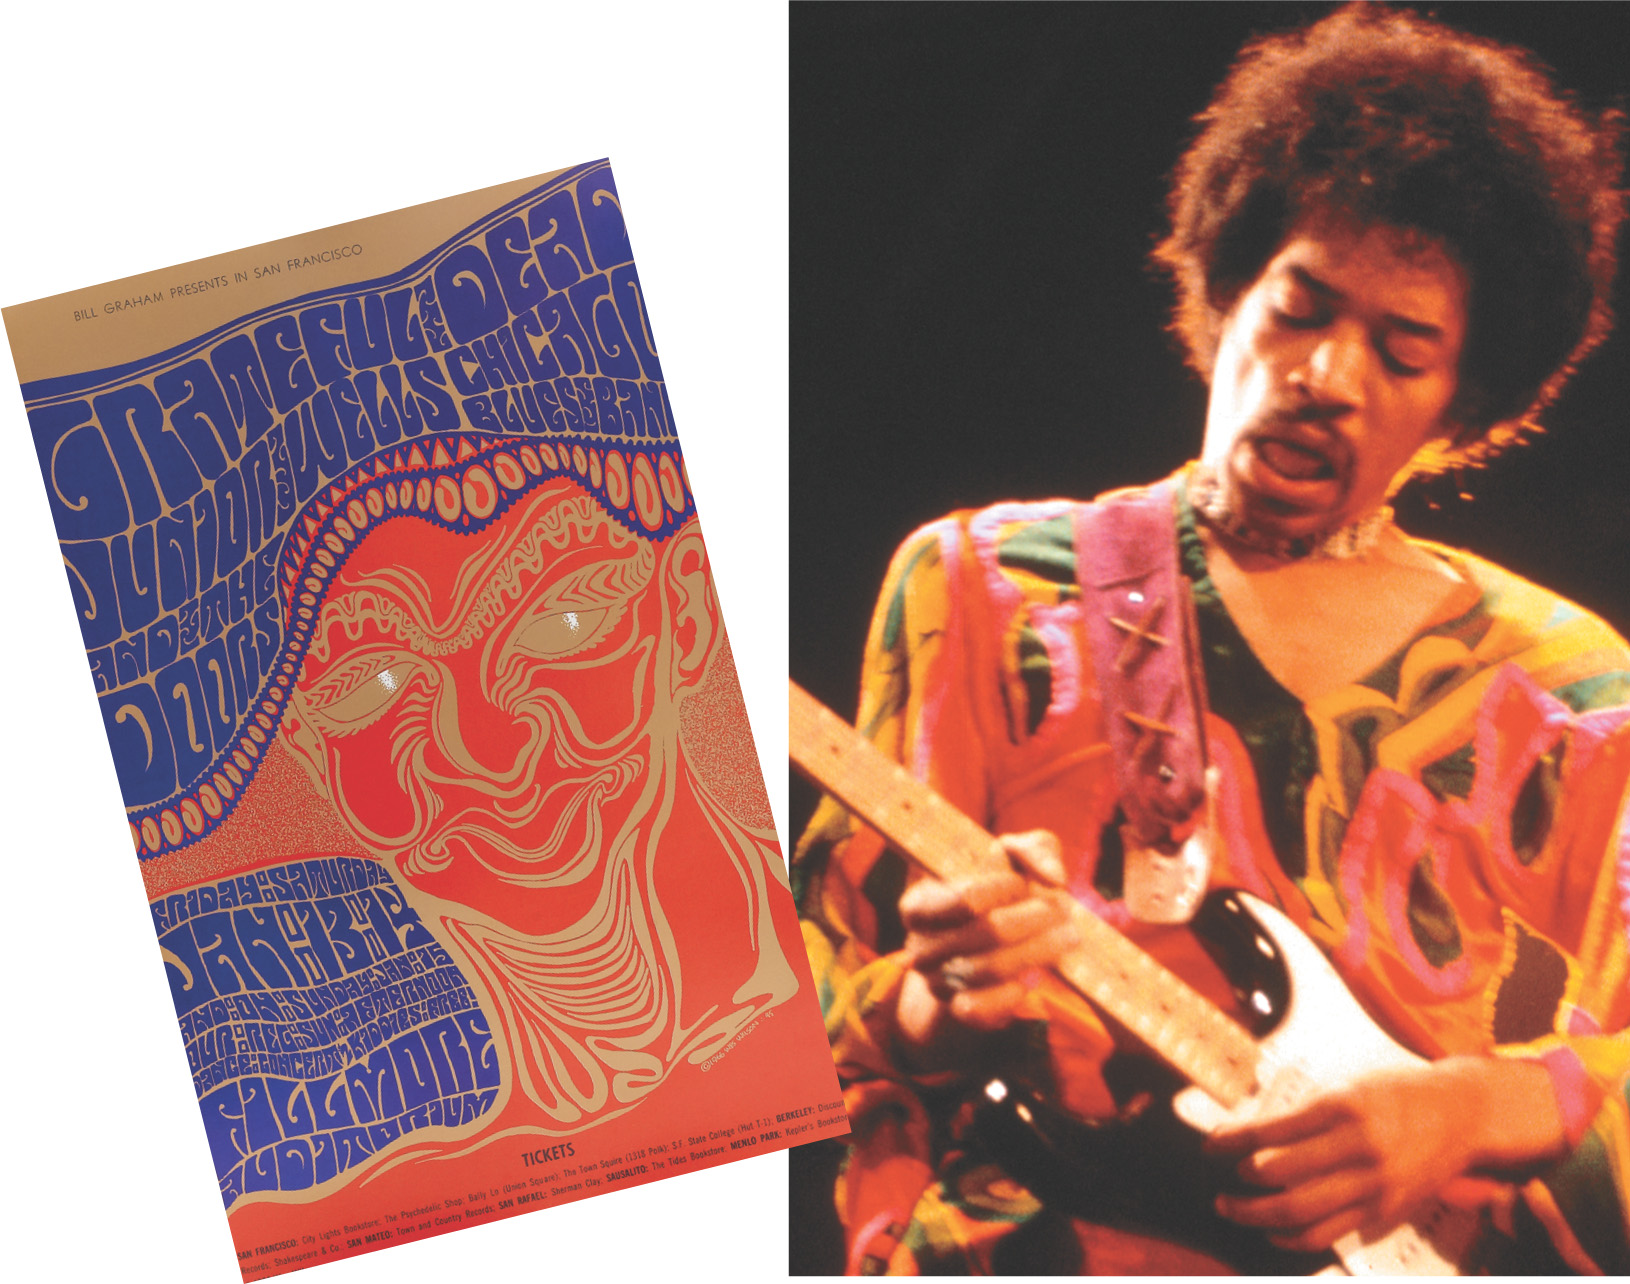 photo: Jimi Hendrix plays guitar.